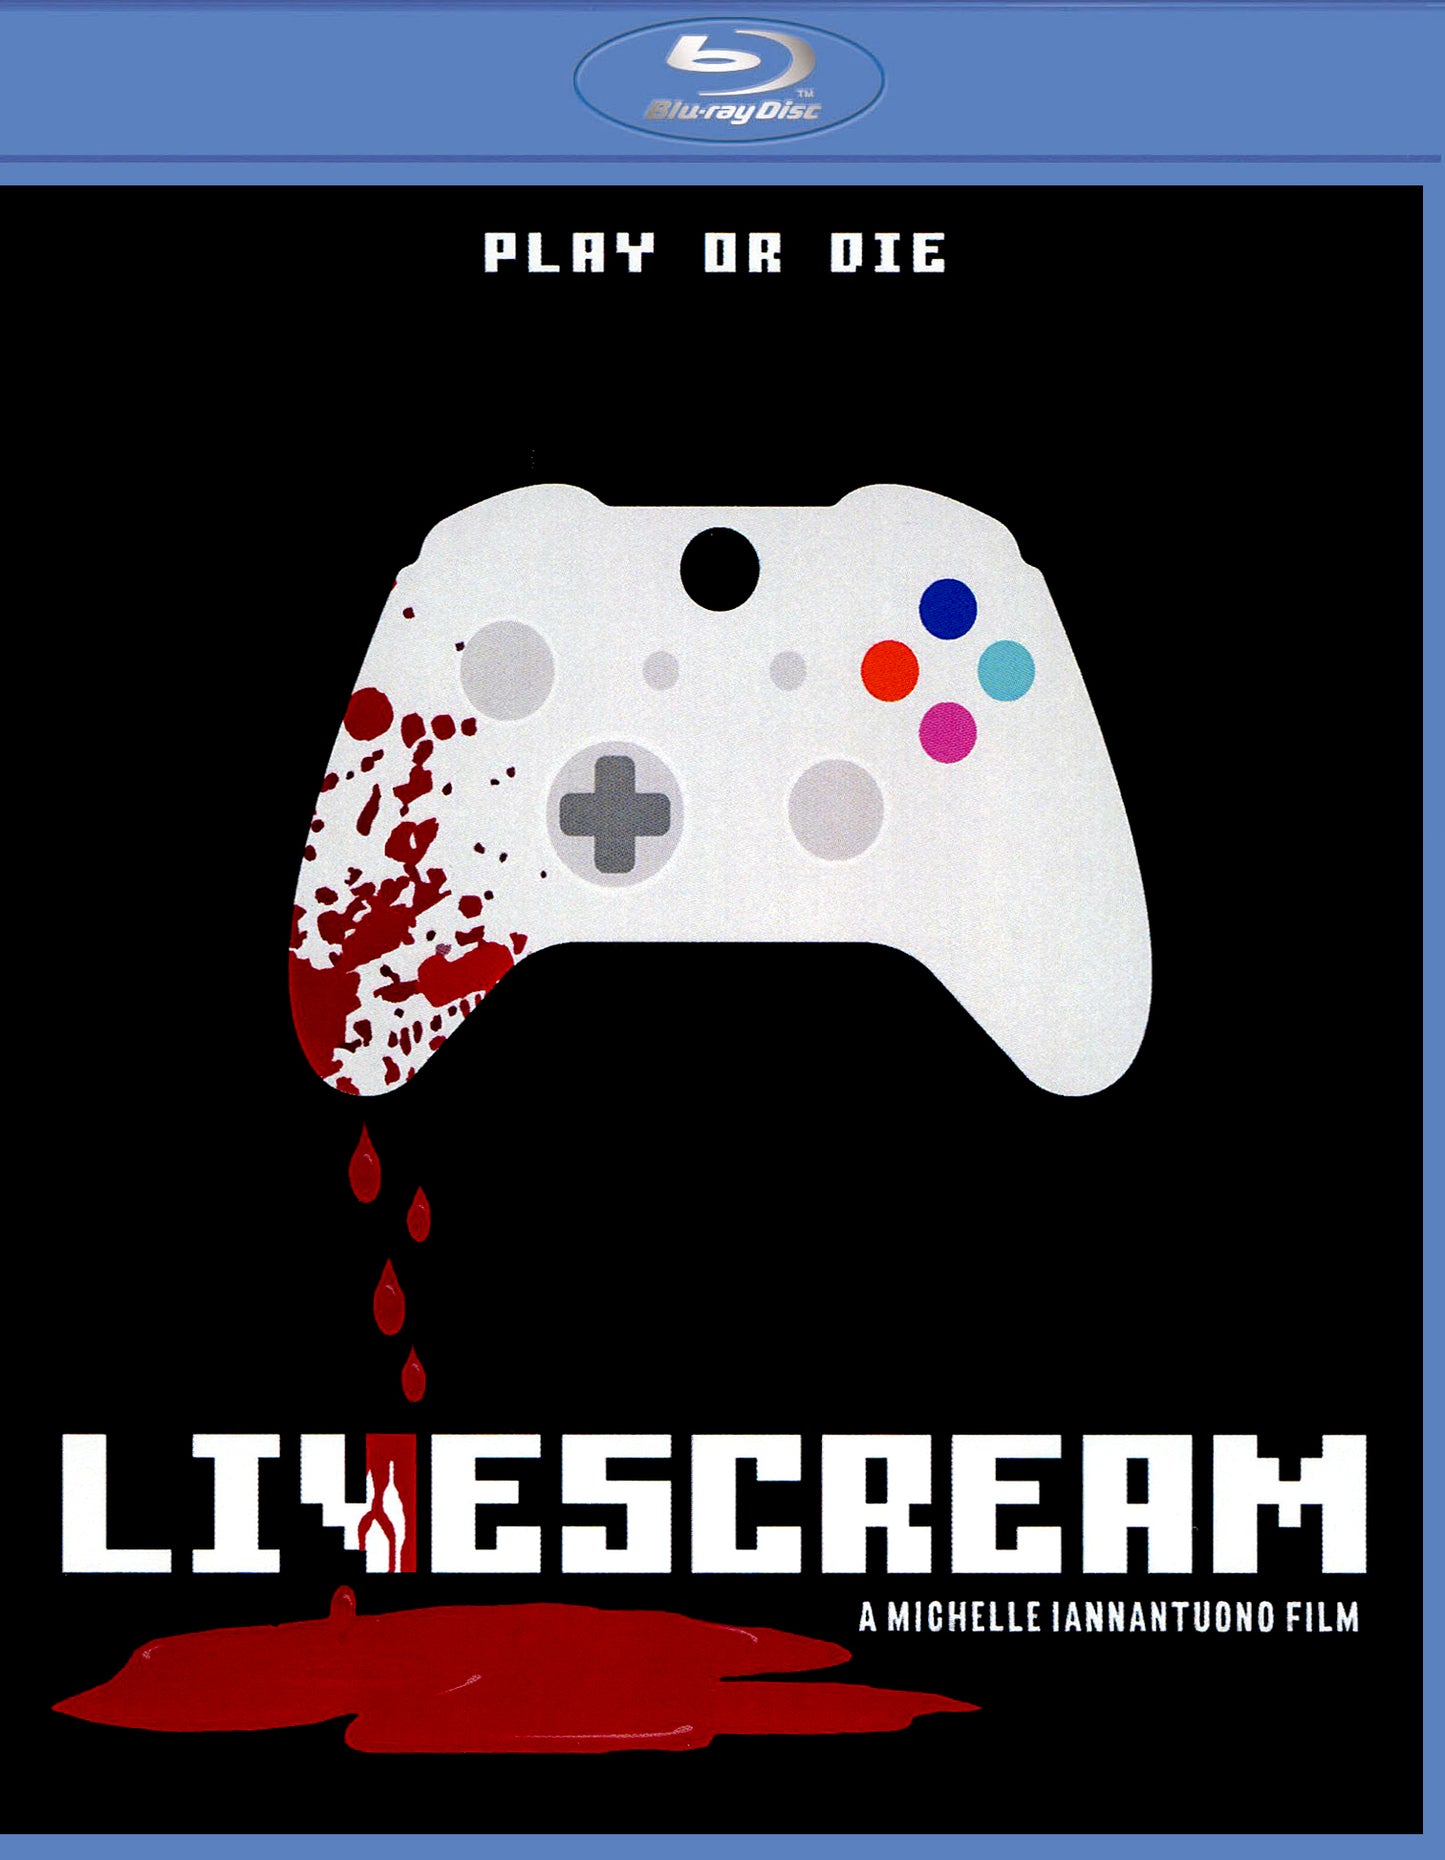 Livescream [Blu-ray] cover art